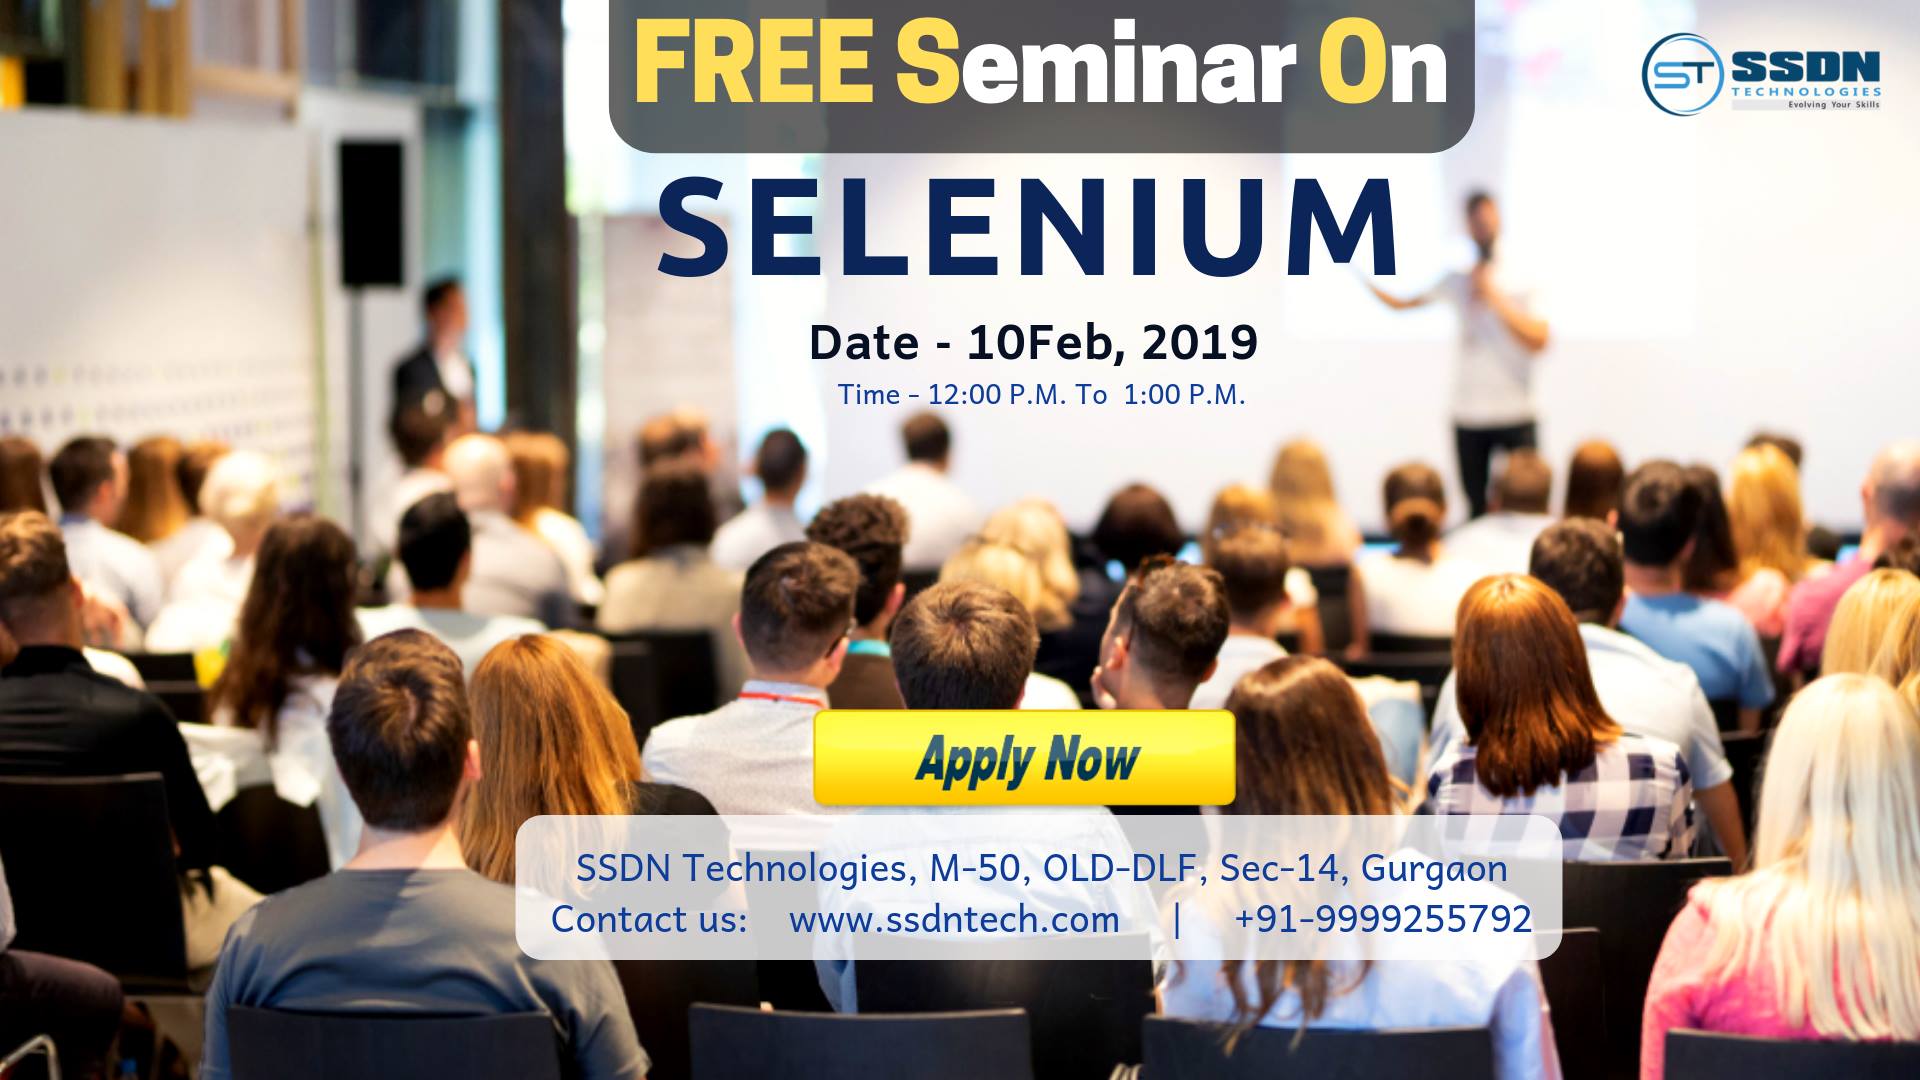 Free Seminar On Selenium At SSDN Technologies